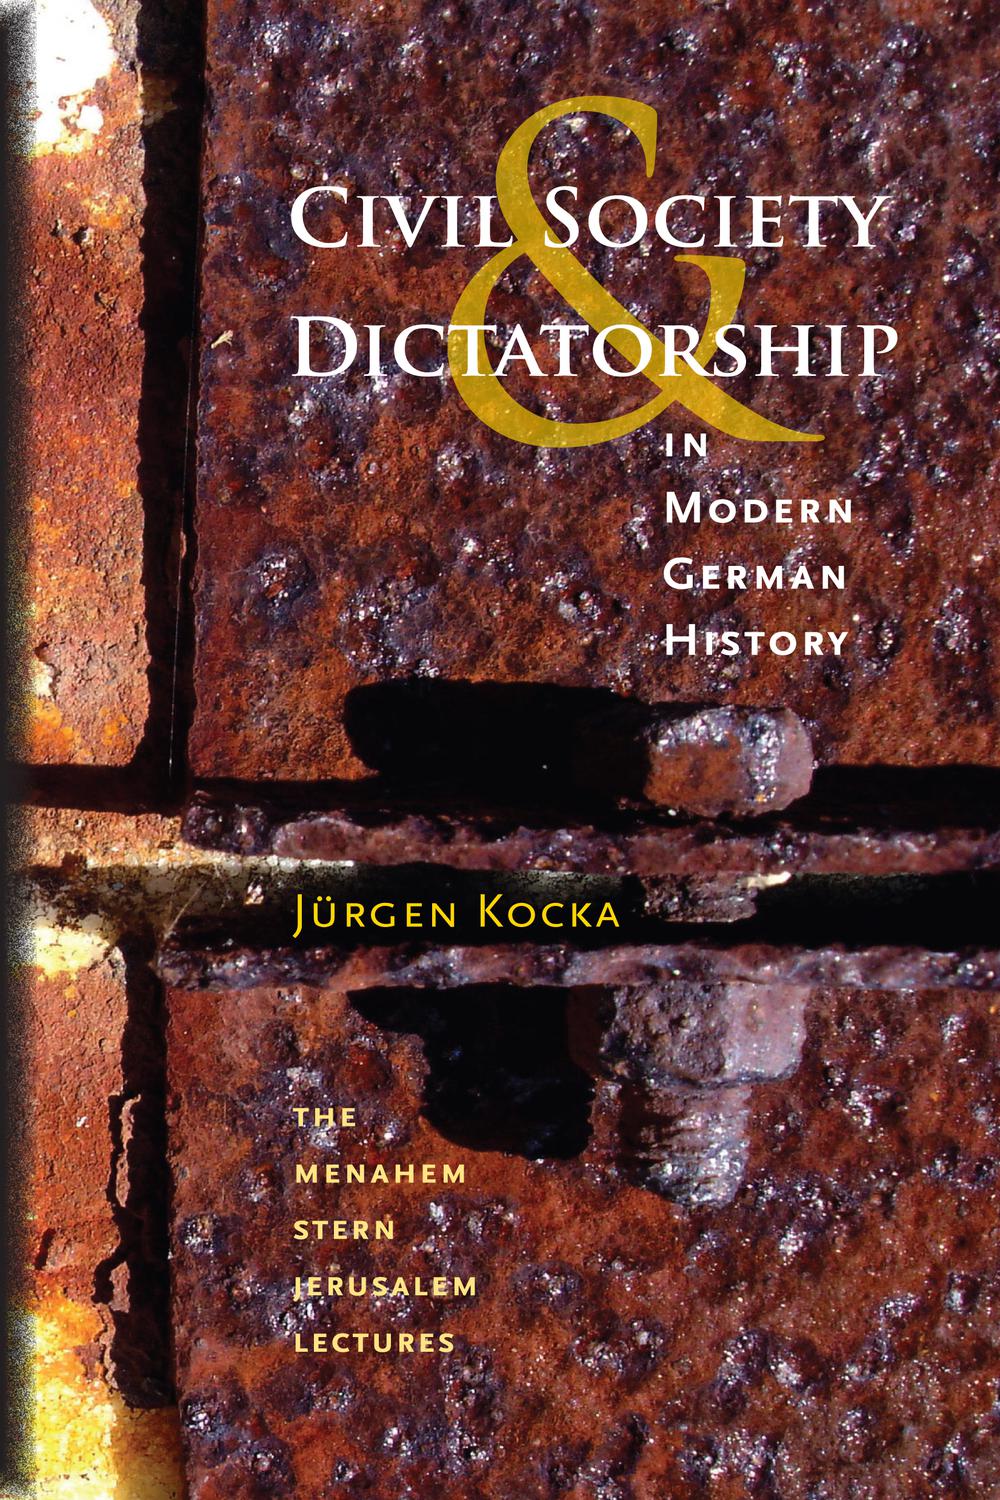 Civil Society and Dictatorship in Modern German History - Jürgen Kocka